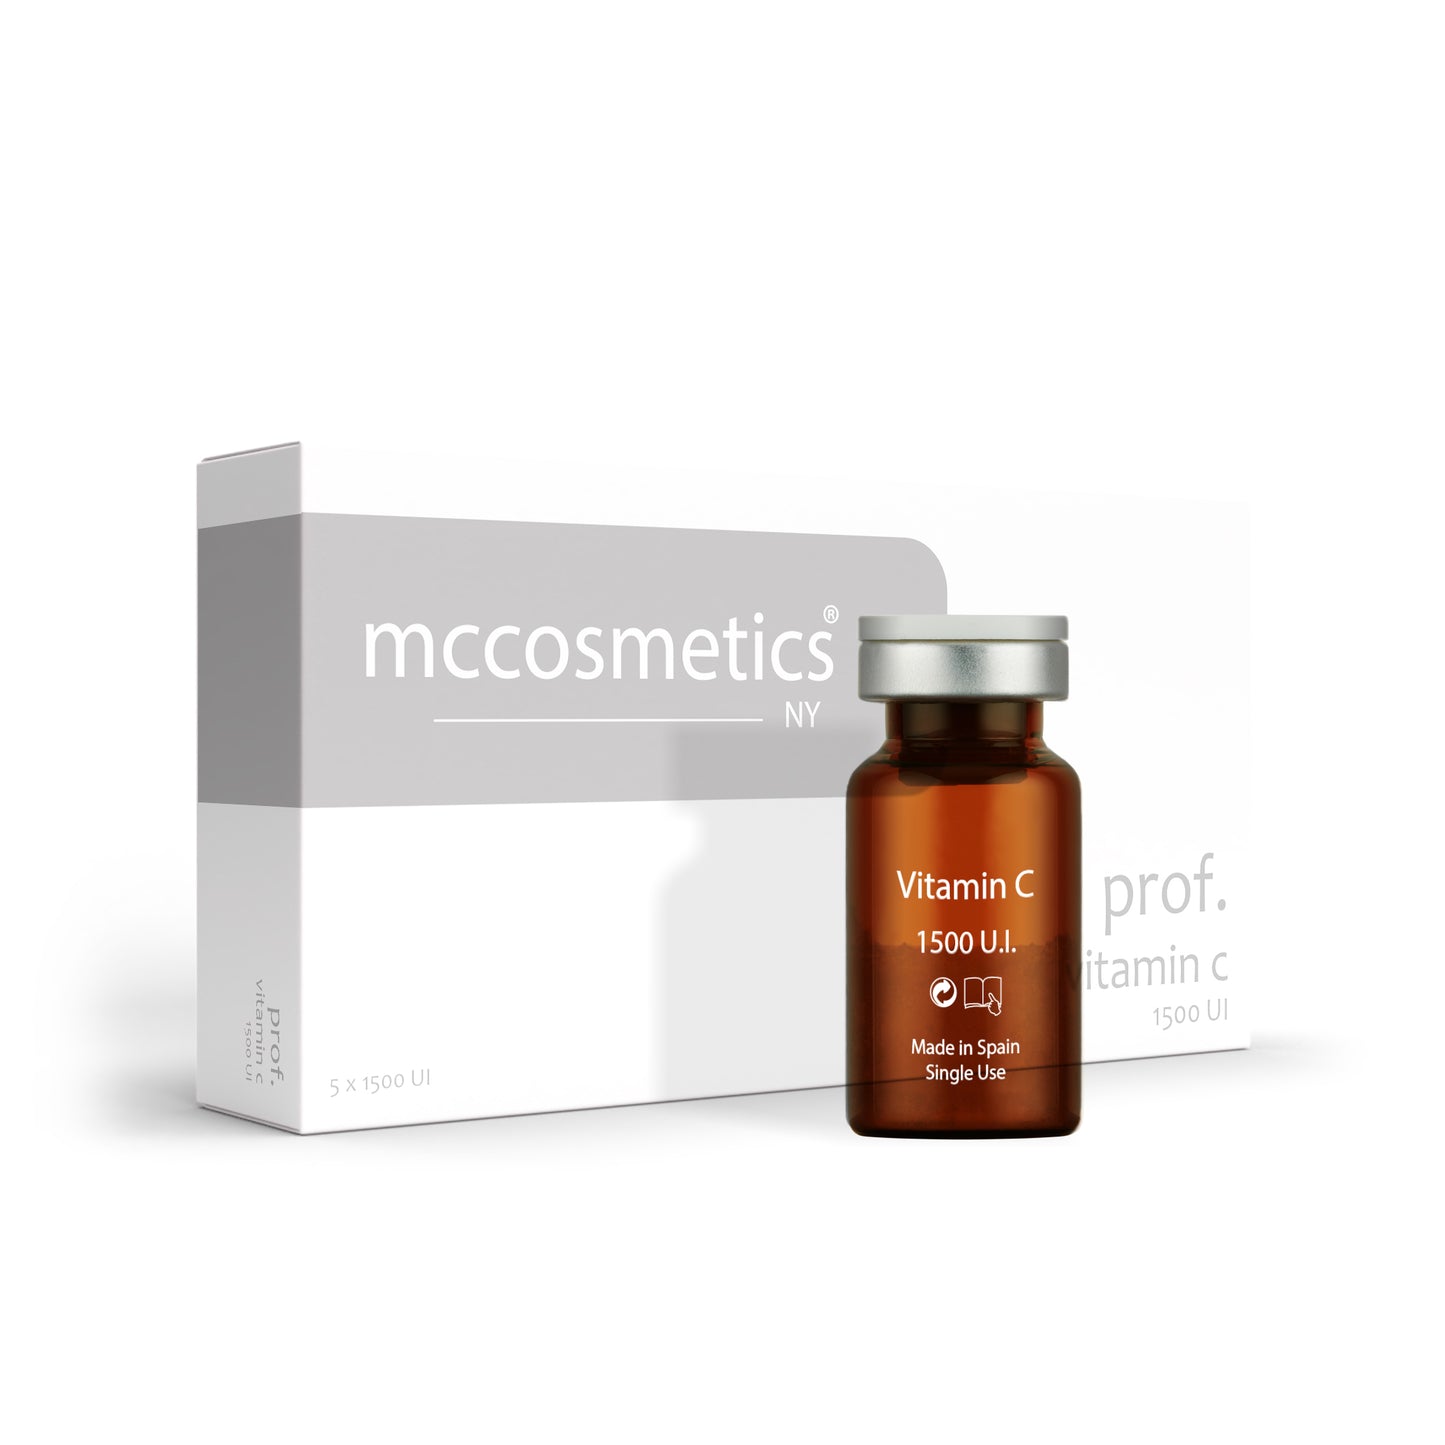 MCCosmetics NY | Prof. Vitamin C 1500 U.I.